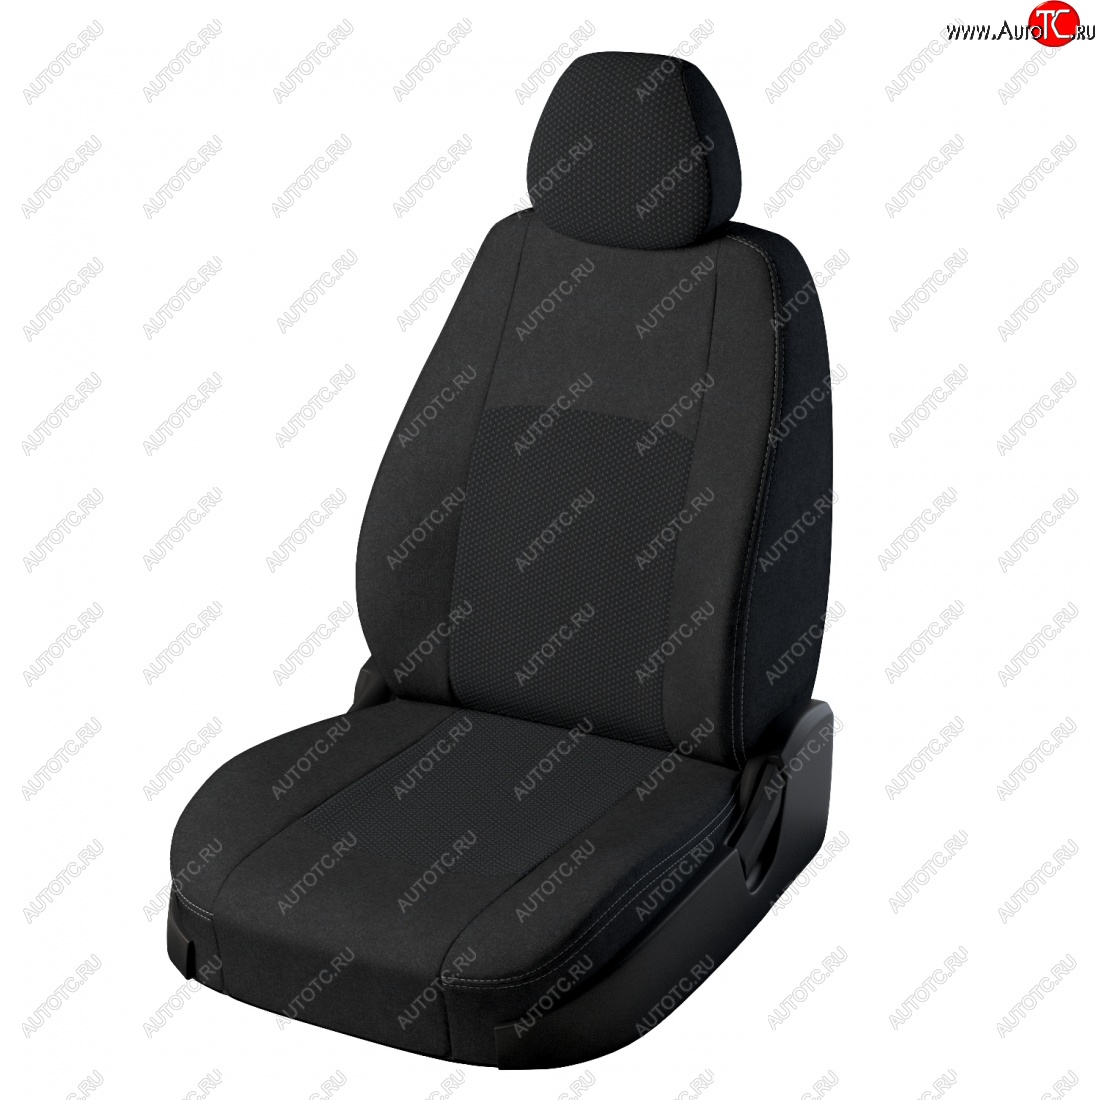 5 199 р. Чехлы для сидений Lord Autofashion Турин (жаккард) Volkswagen Jetta A6 седан дорестайлинг (2011-2015) (Чёрный, вставка Эльбрус)